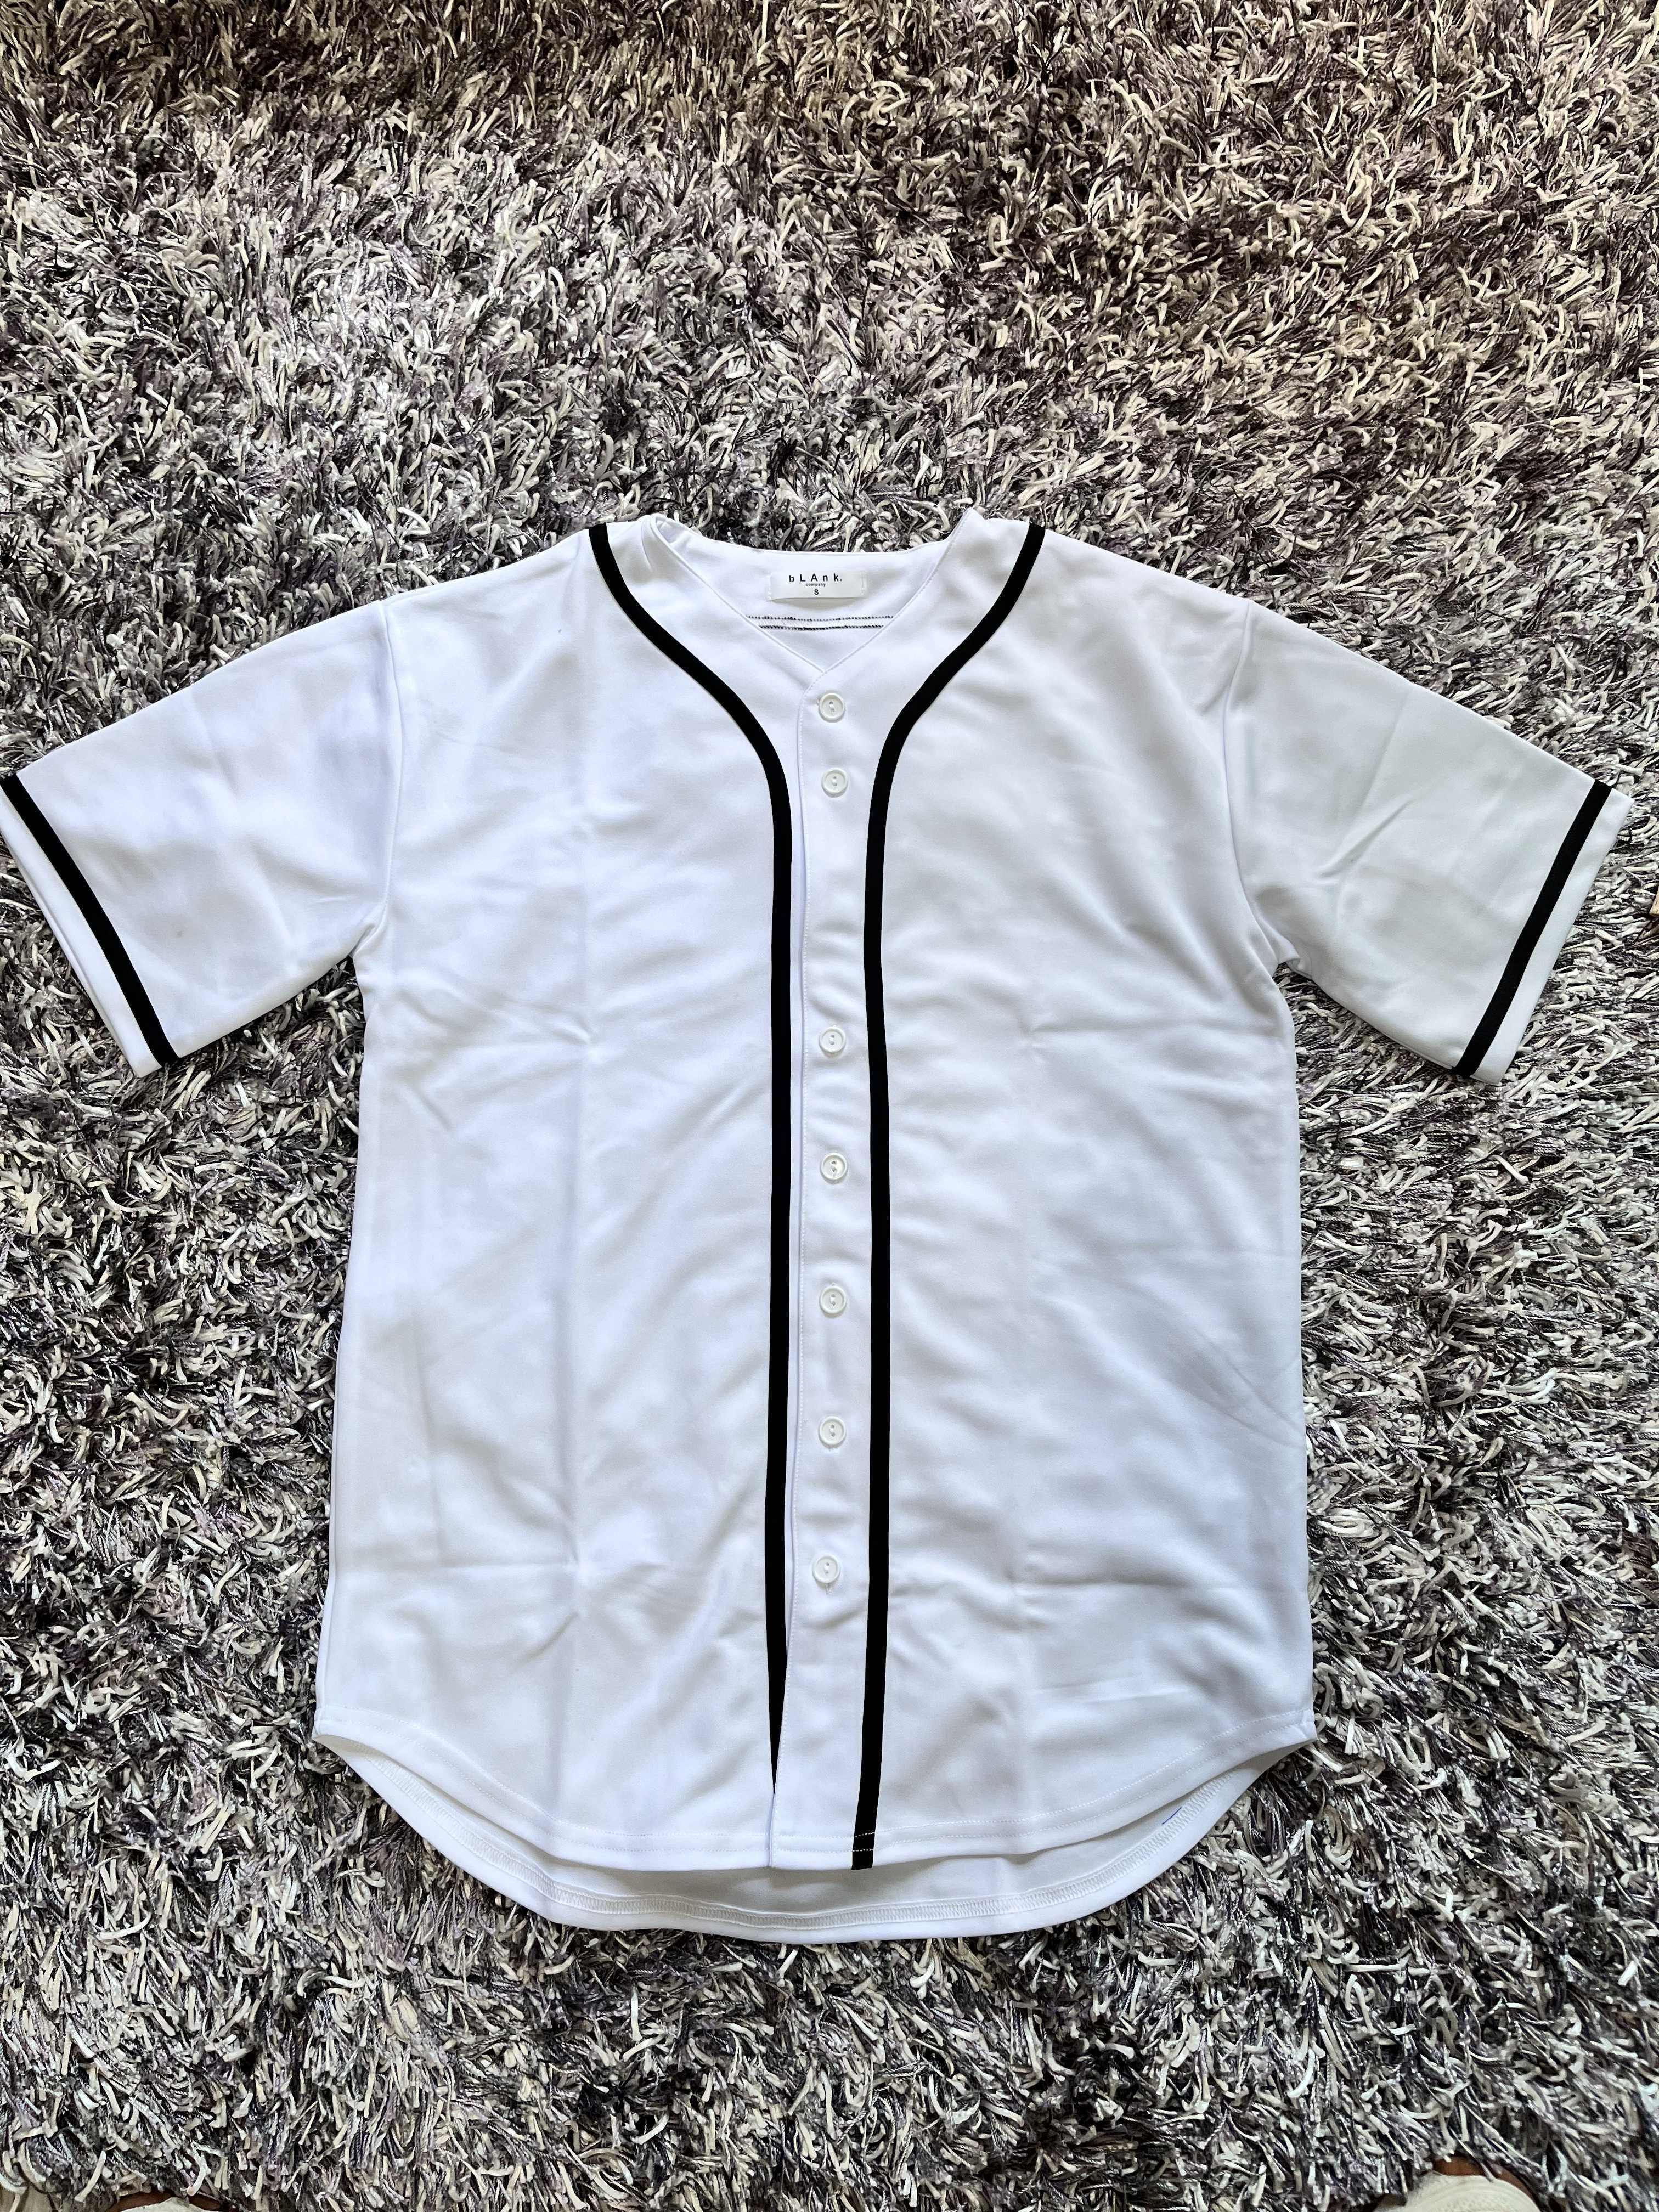 Mens Baseball JERSEY Raglan Plain T Shirt Team Sport Button Fashion Tee  Casual